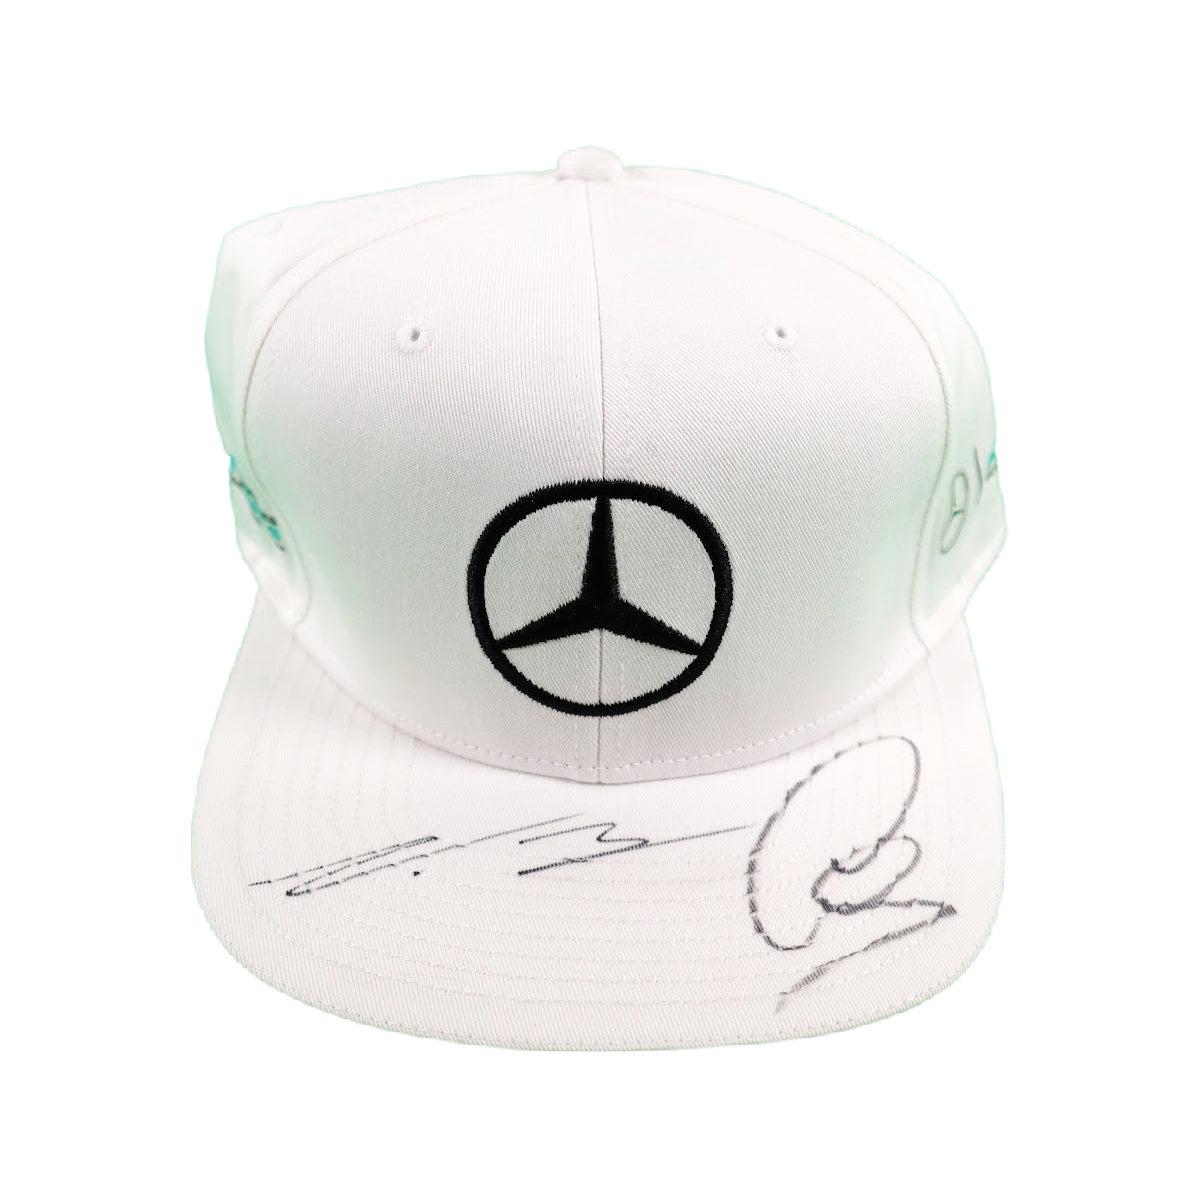 Lewis Hamilton and Valtteri Bottas Signed Mercedes Hat Autographed JSA COA